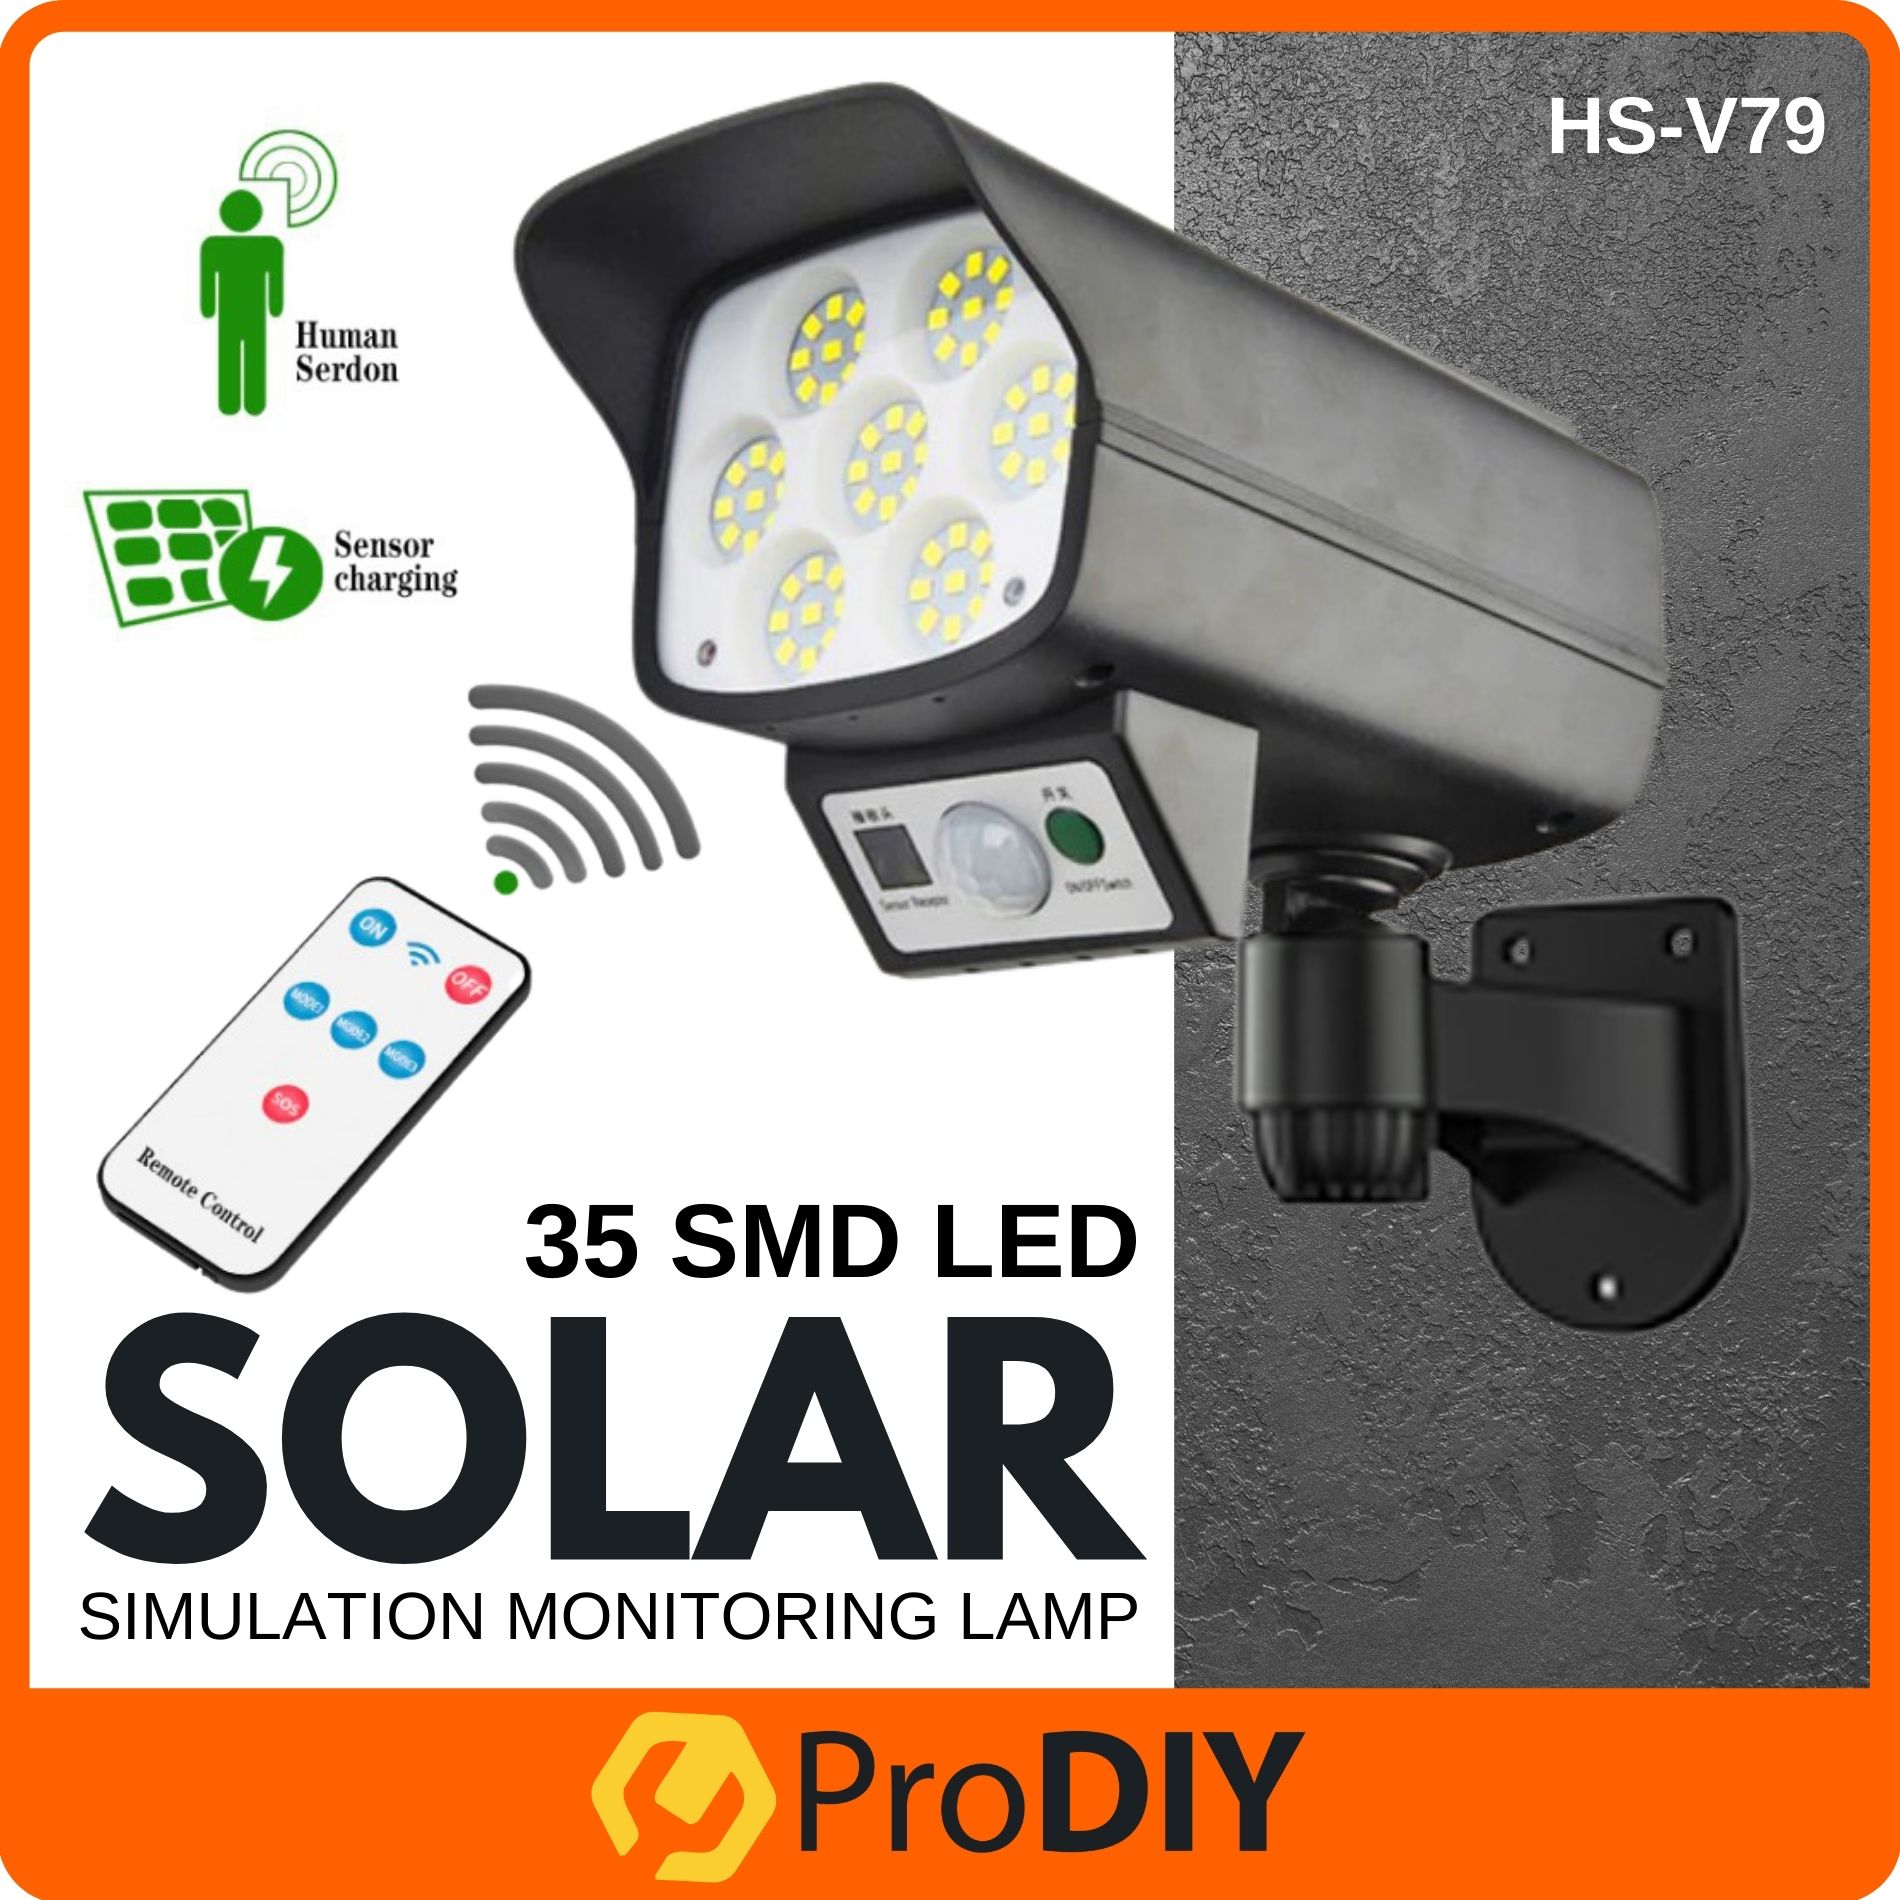 HS-V79 LED Solar Light W/Remote Control Outdoor 3 Mode Sensor 35 SMD LED Simulation Monitoring Lamp